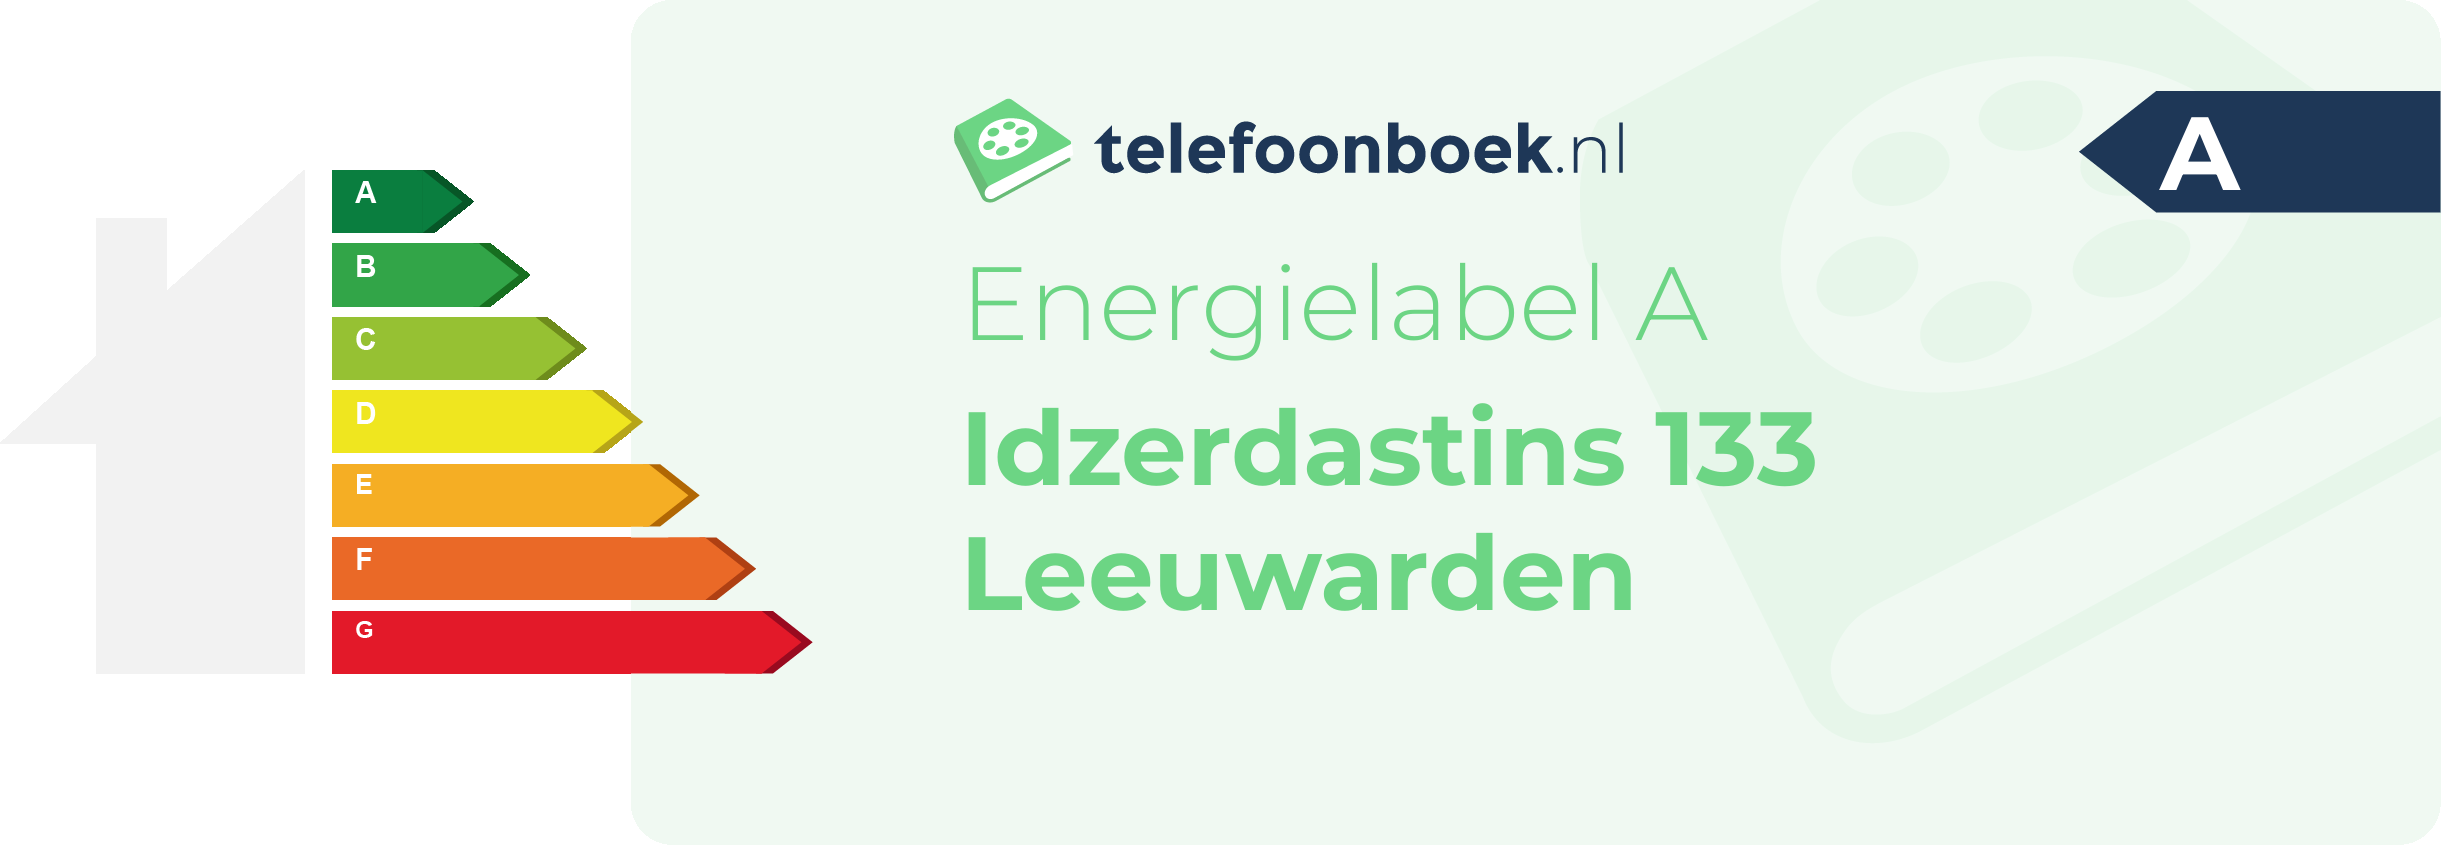 Energielabel Idzerdastins 133 Leeuwarden